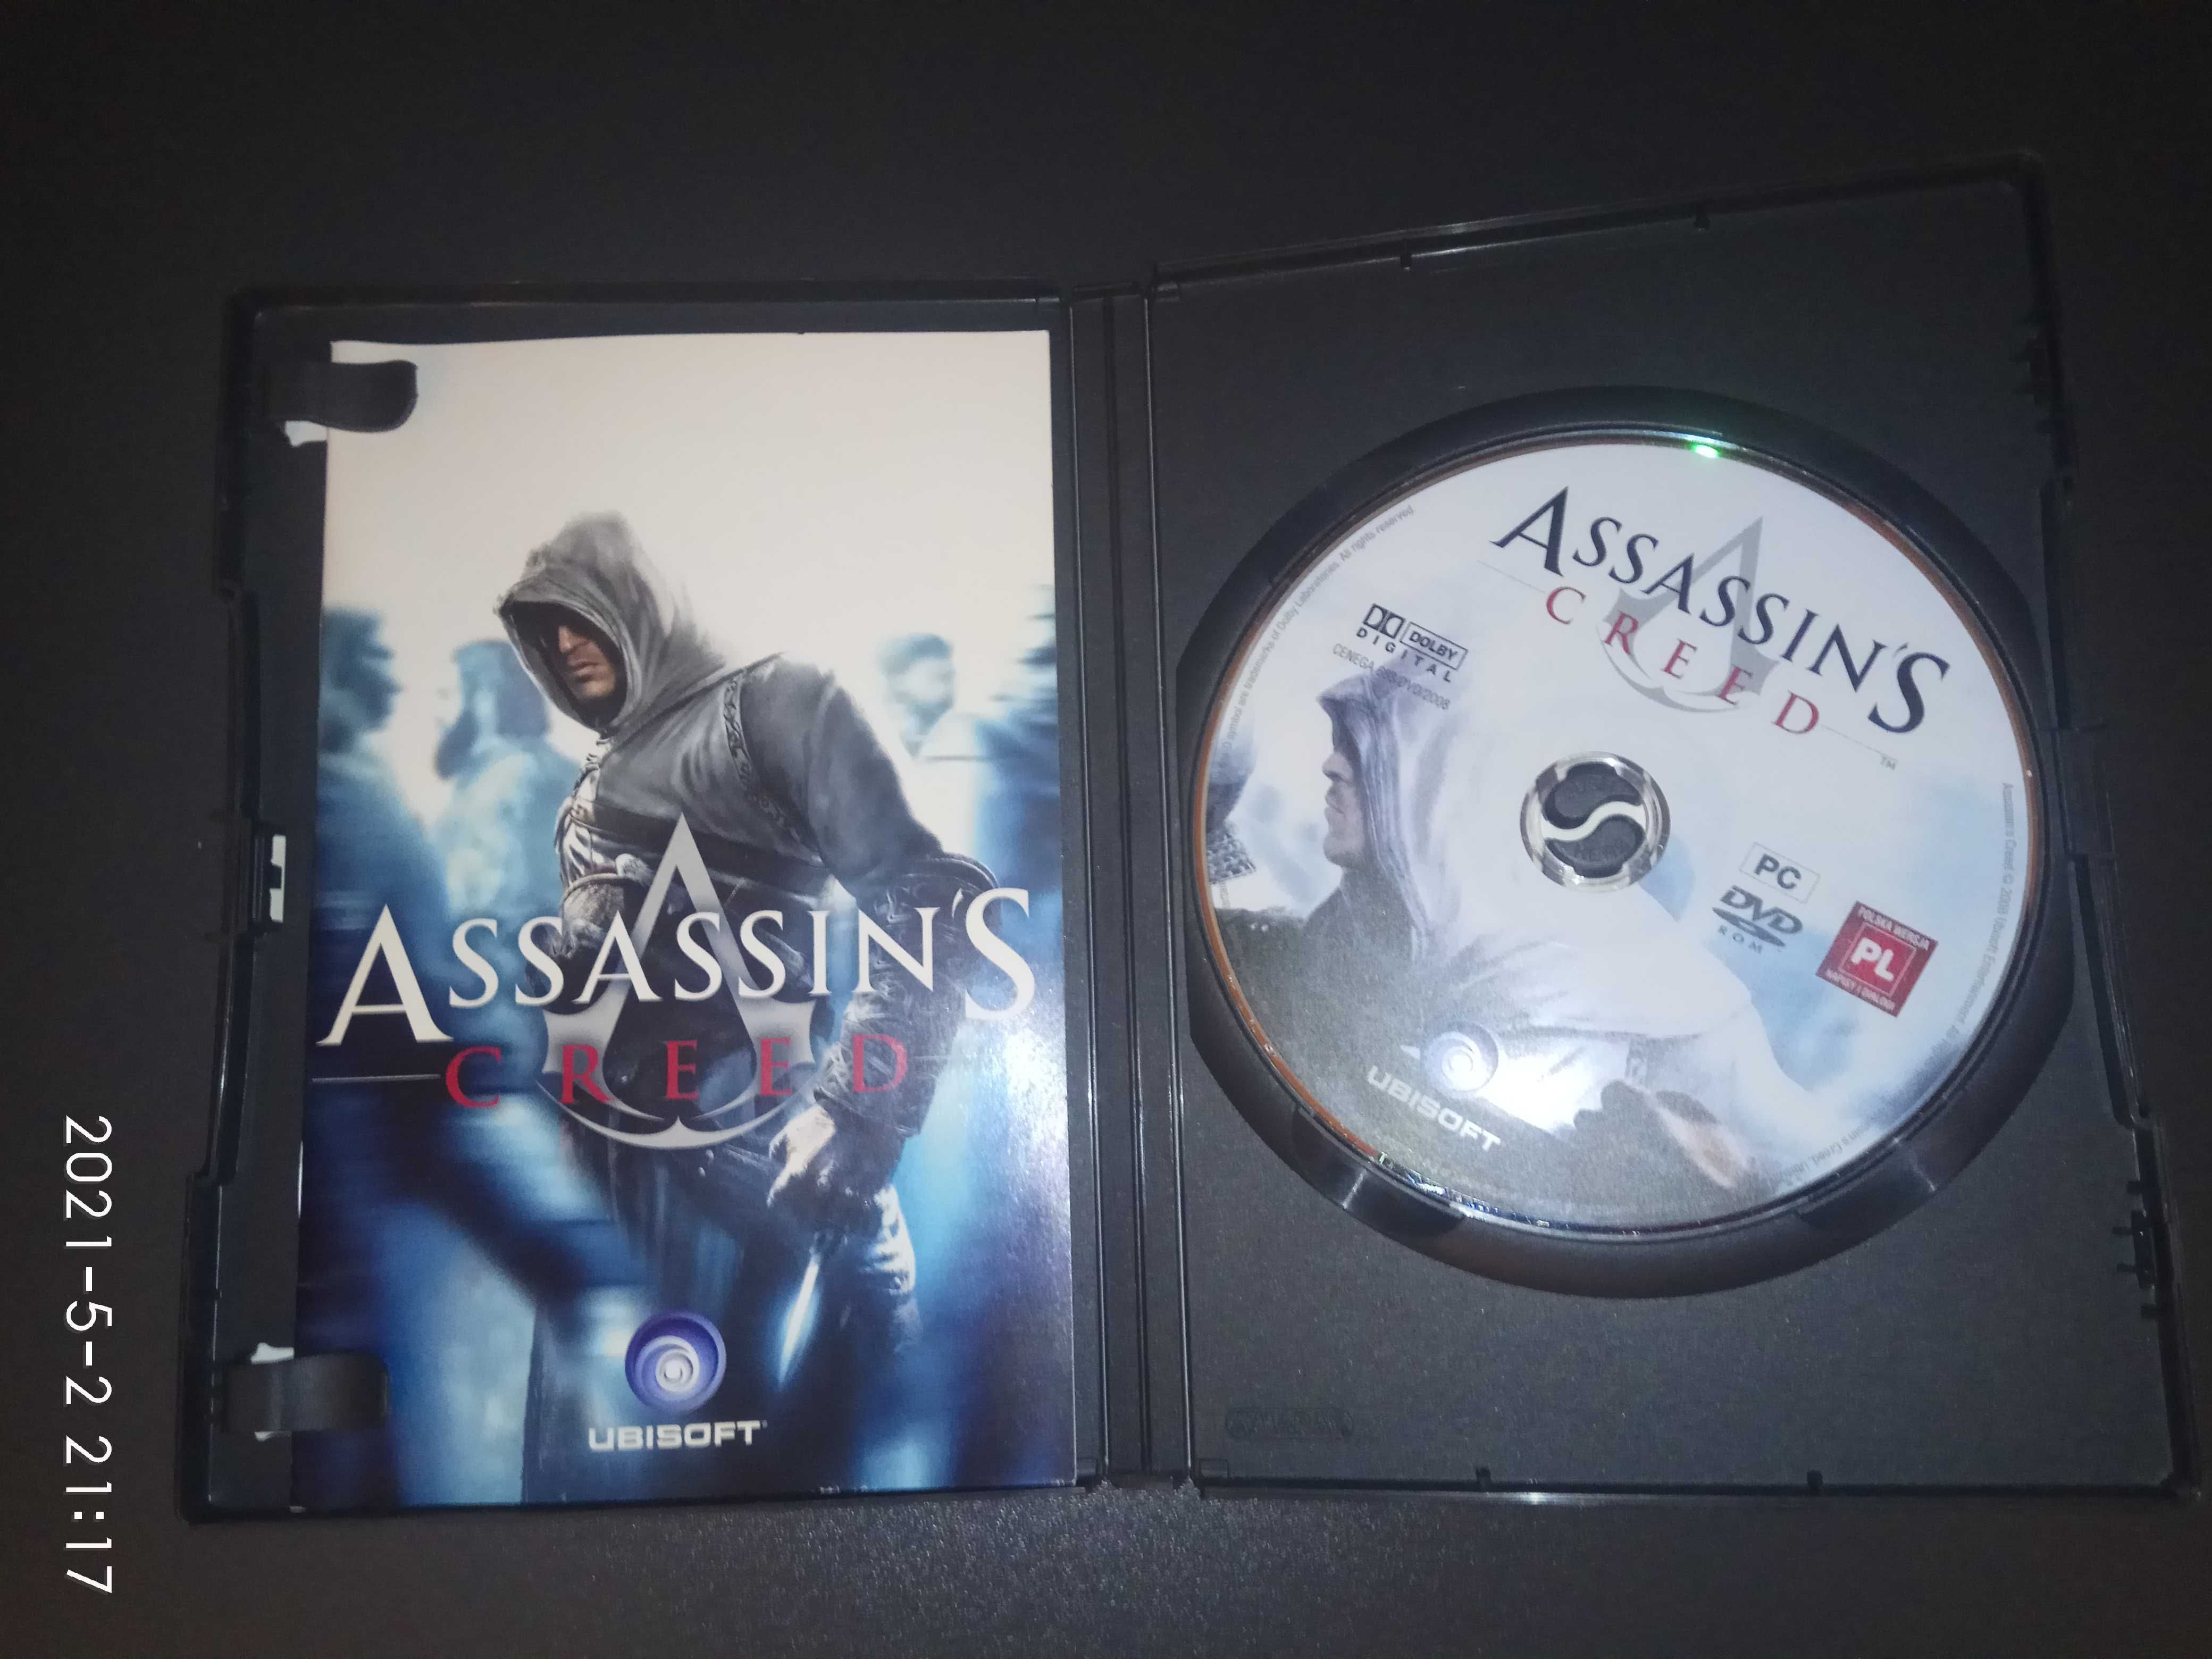 Gra Assassins Creed PL Retro PC.